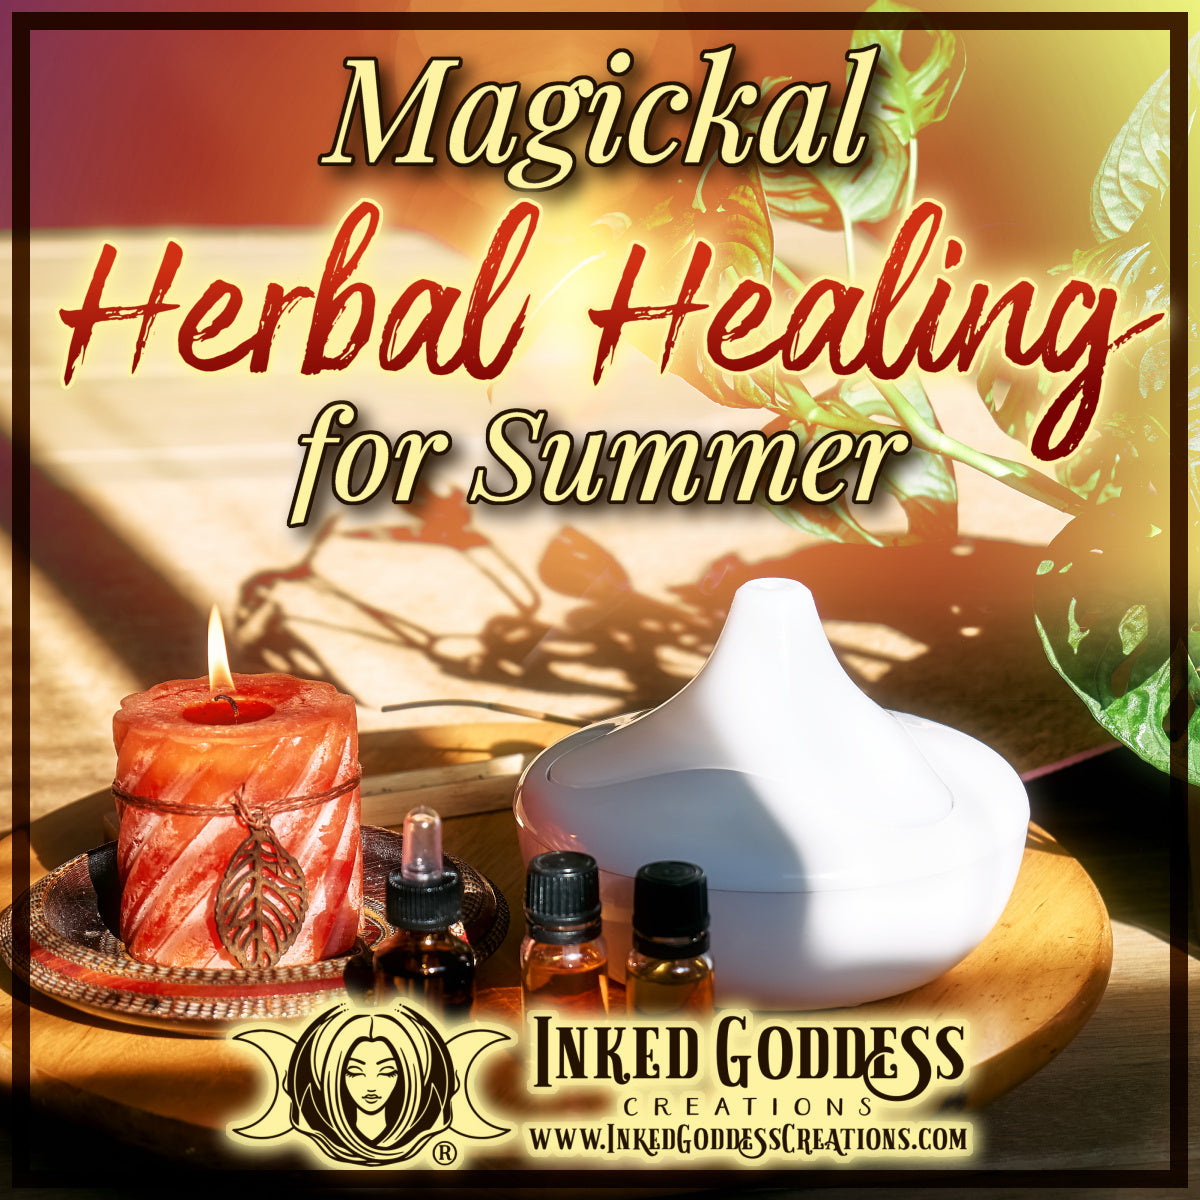 Magickal Herbal Healing for Summer